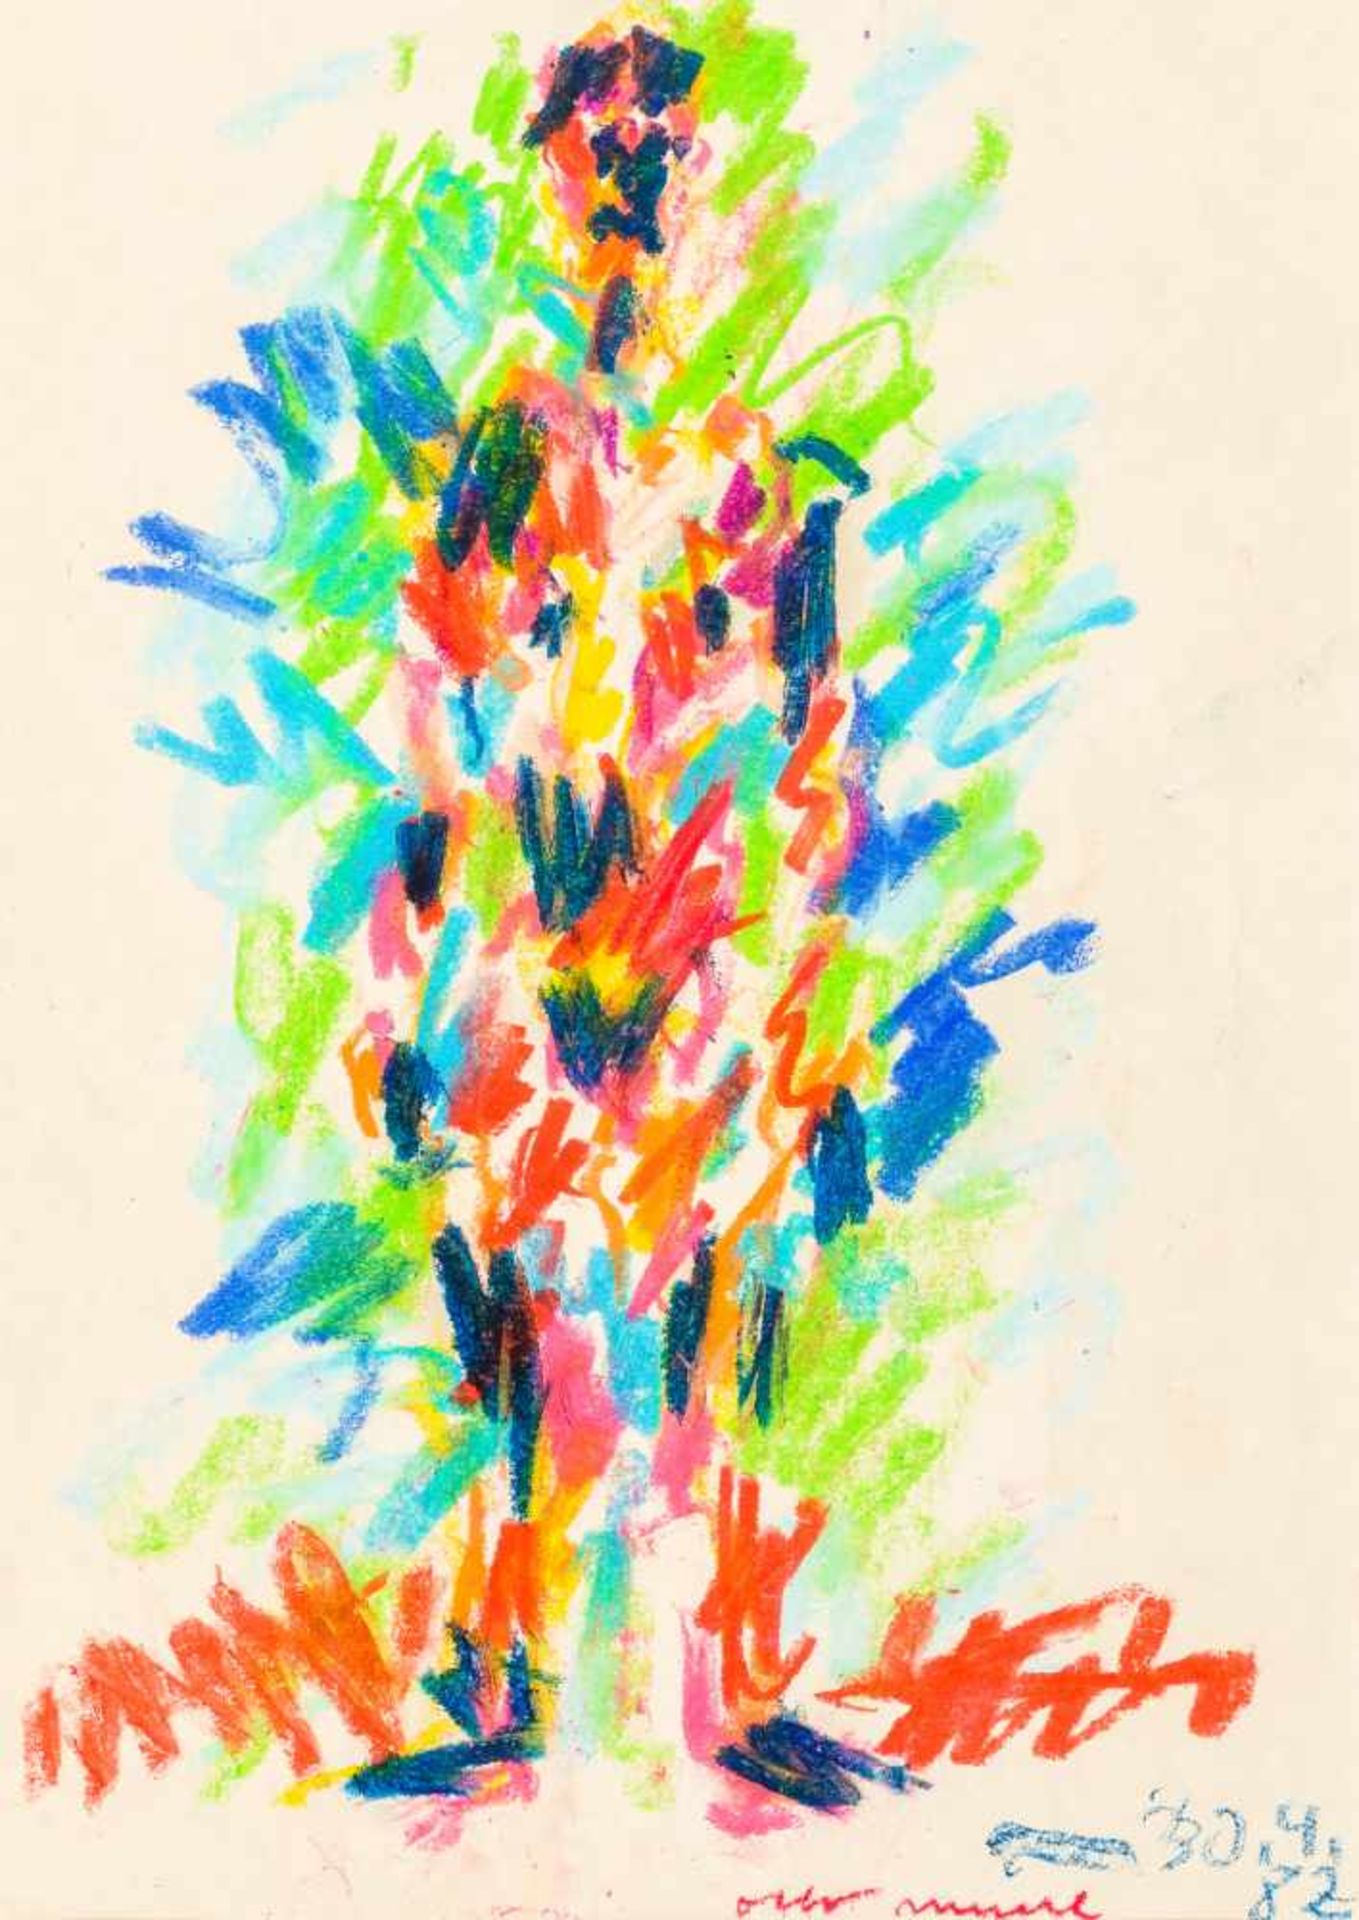 Otto MühlGrodnau 1925 - 2013 MoncarapachoOhne Titel / untitledÖlkreide auf Papier / oil crayon on